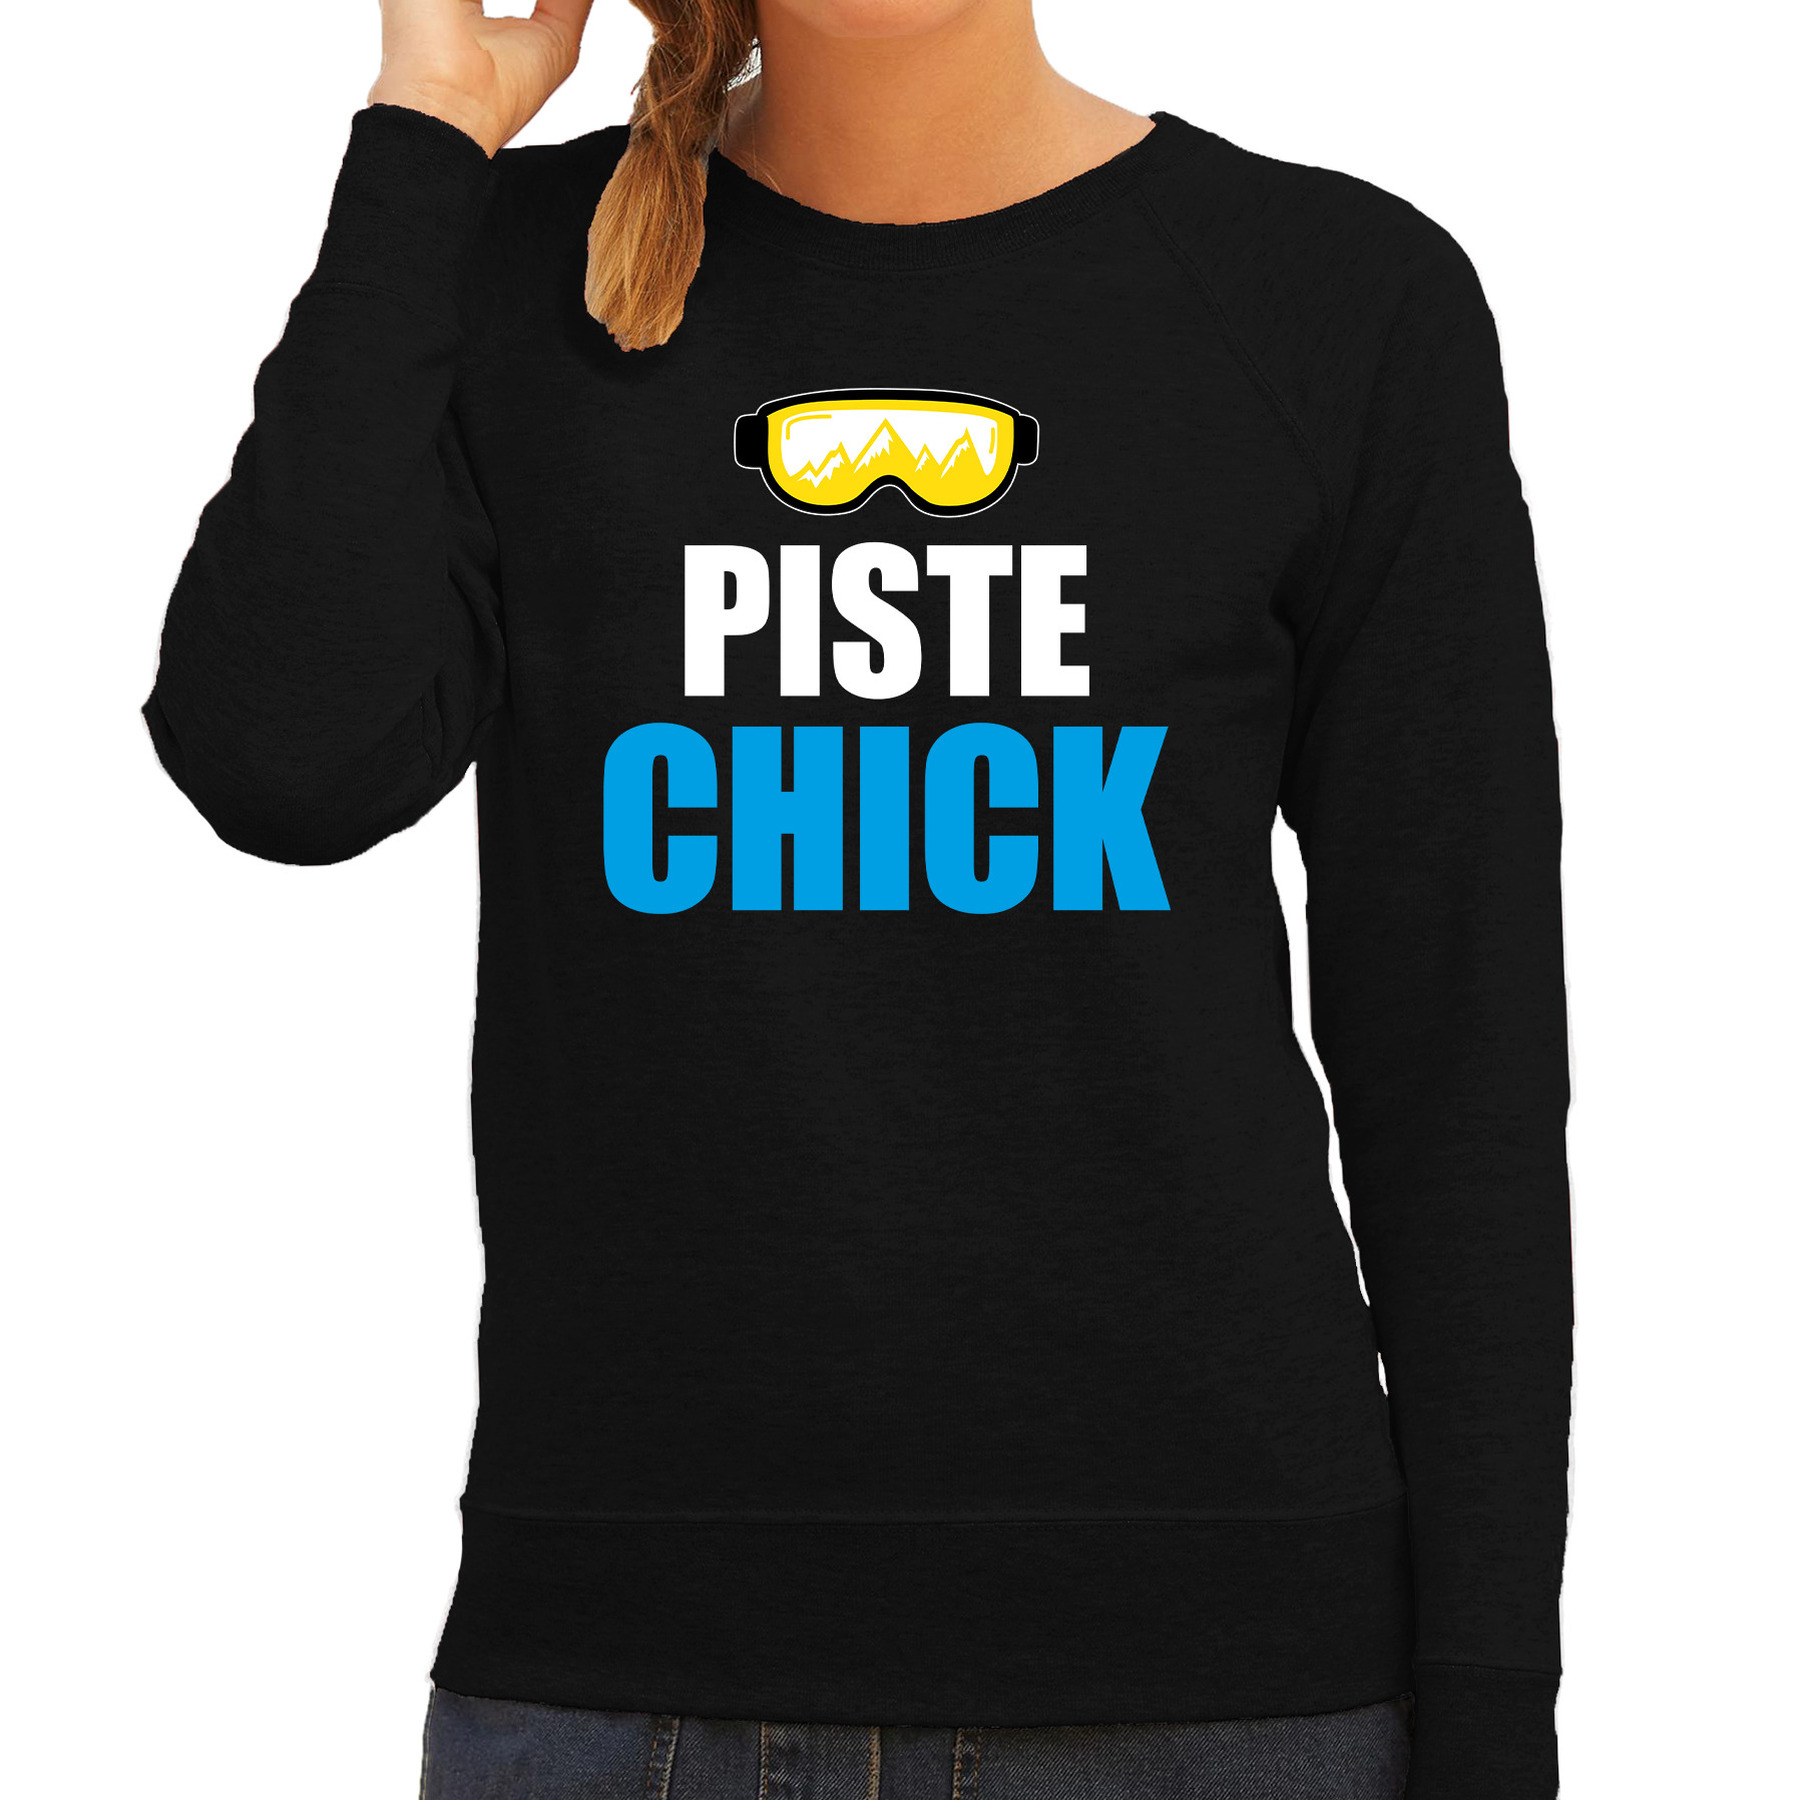 Apres ski sweater Piste Chick zwart dames Wintersport trui Foute apres ski outfit